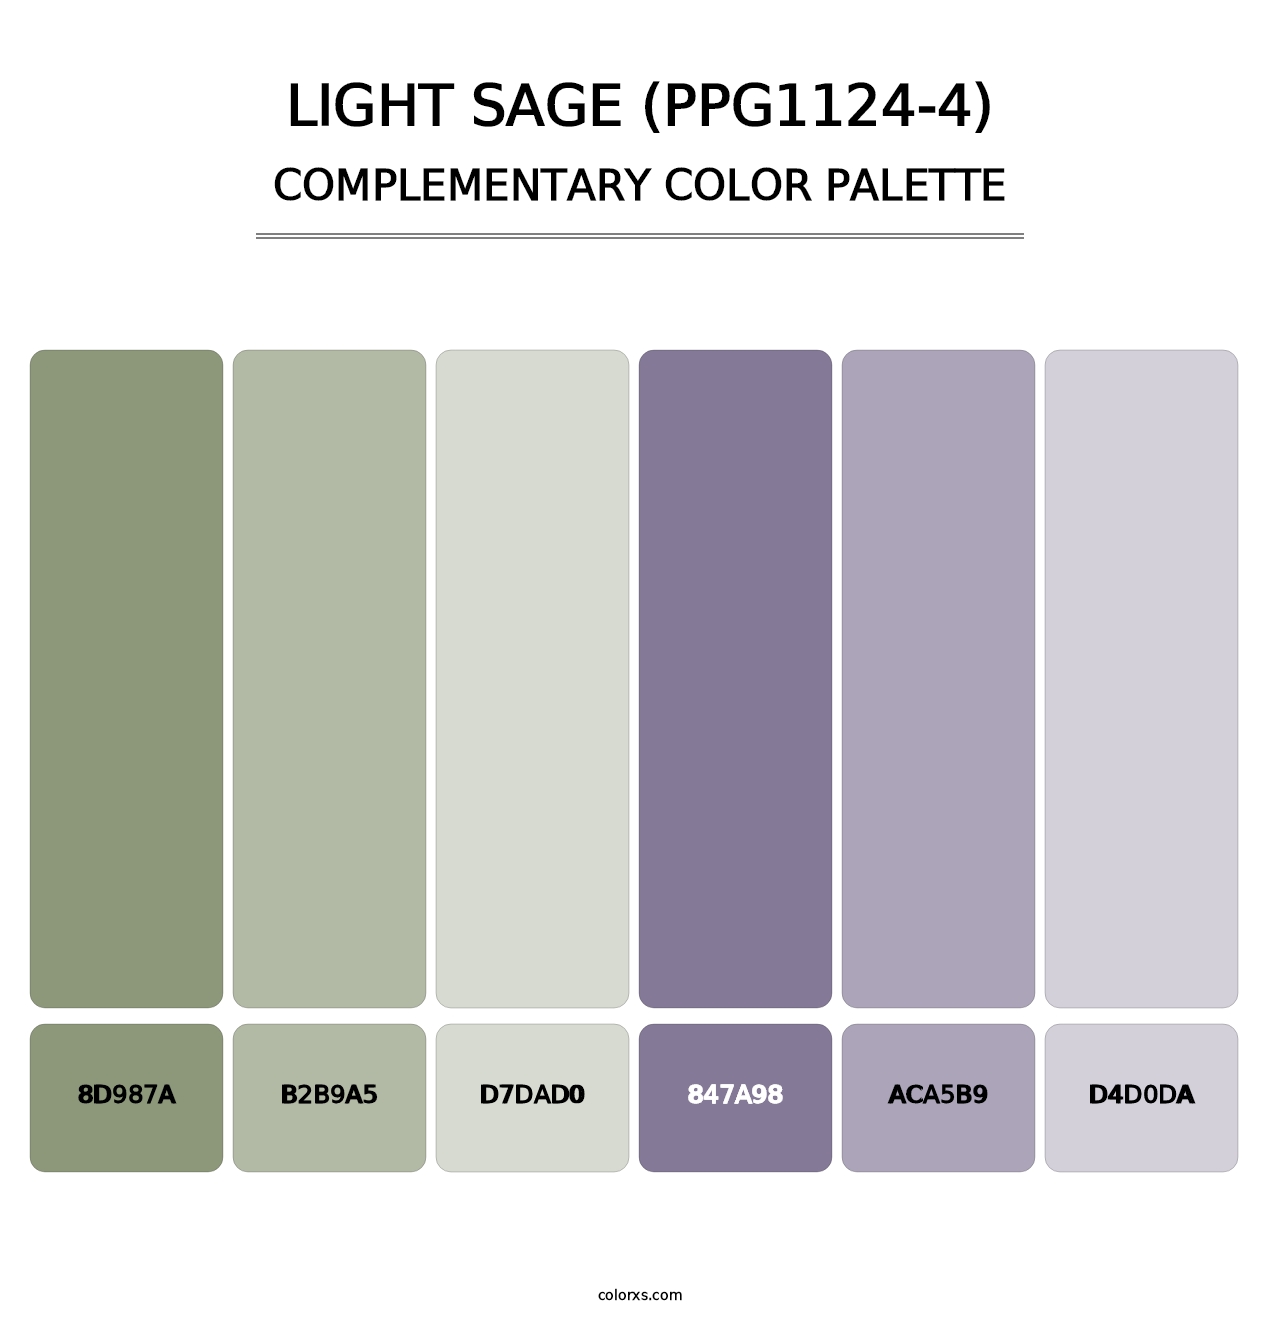 Light Sage (PPG1124-4) - Complementary Color Palette